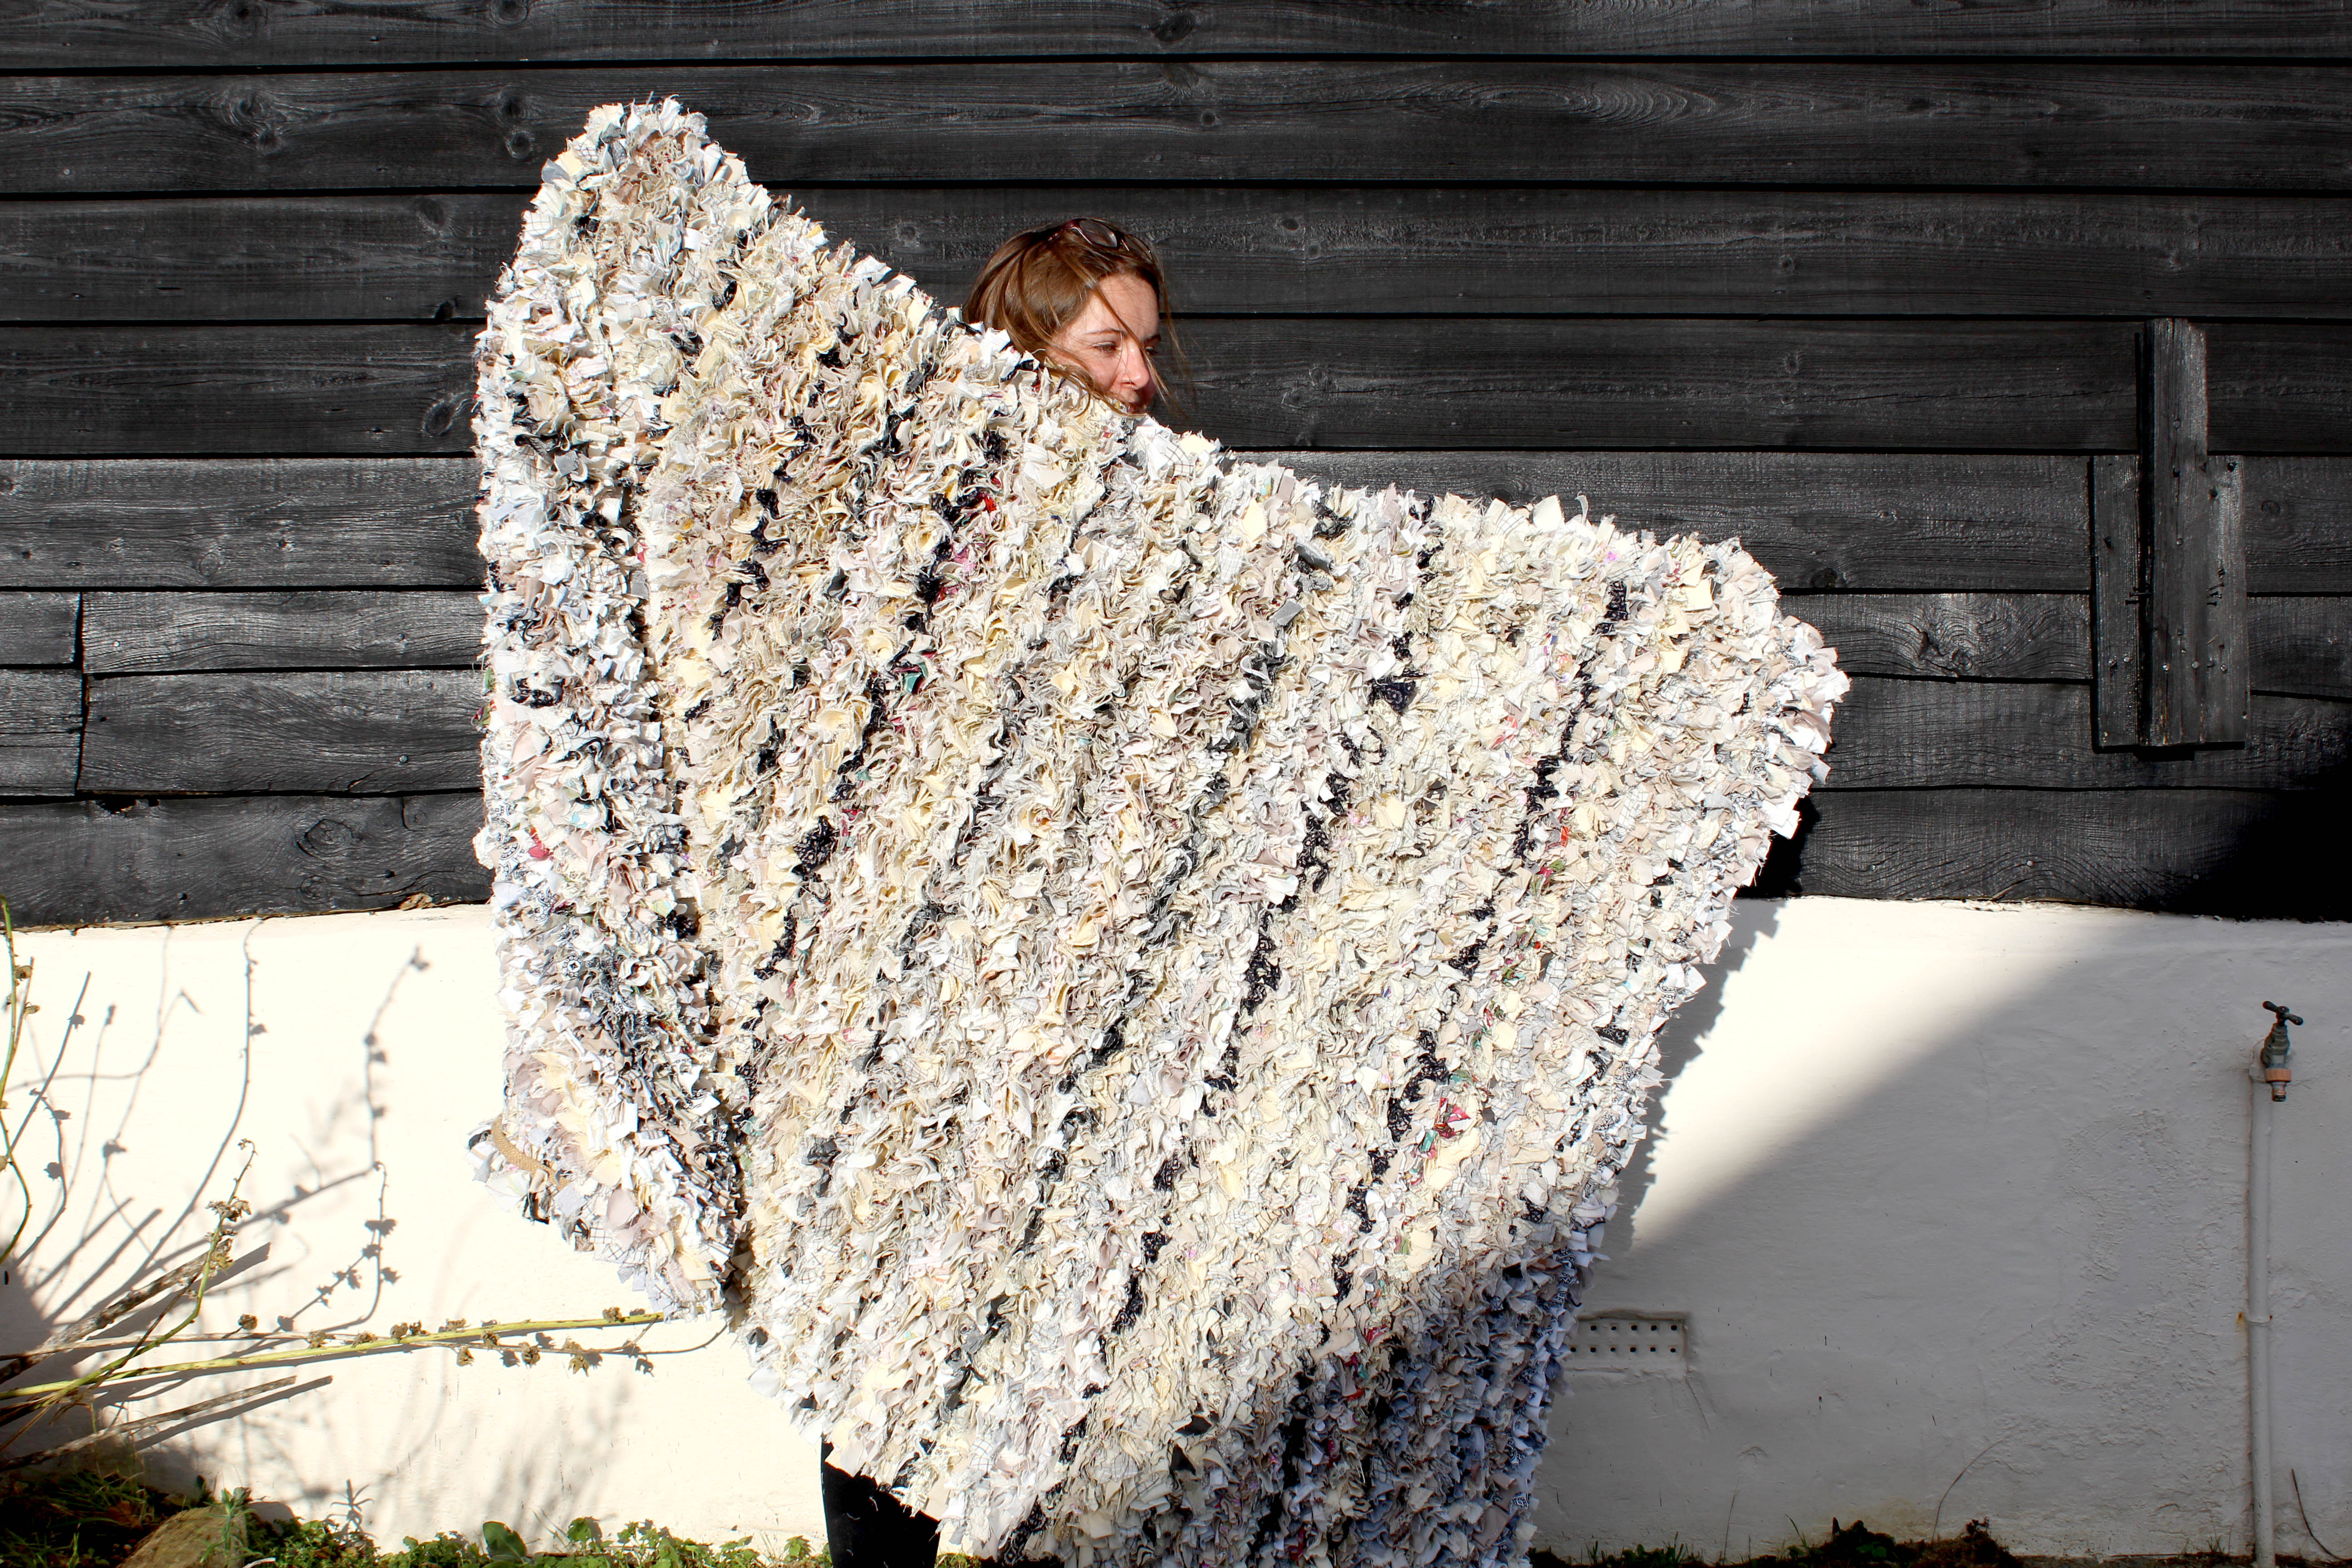 200 x 140cm extra large rag rug made using cream and grey assorted fabrics held up